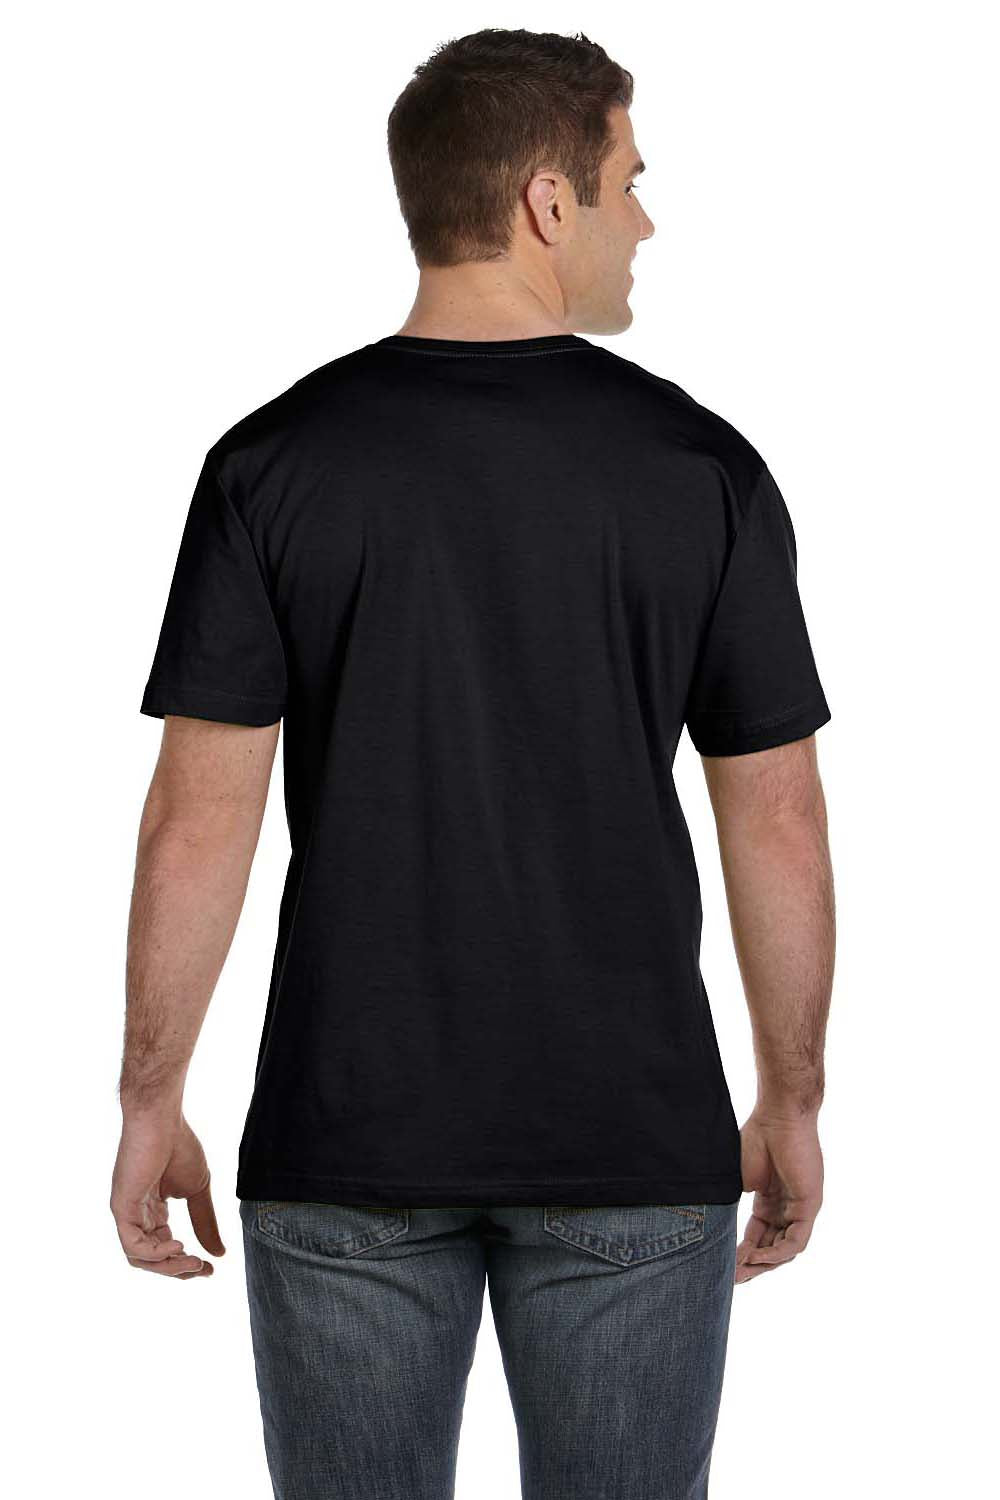 LAT 6901 Mens Fine Jersey Short Sleeve Crewneck T-Shirt Black Back